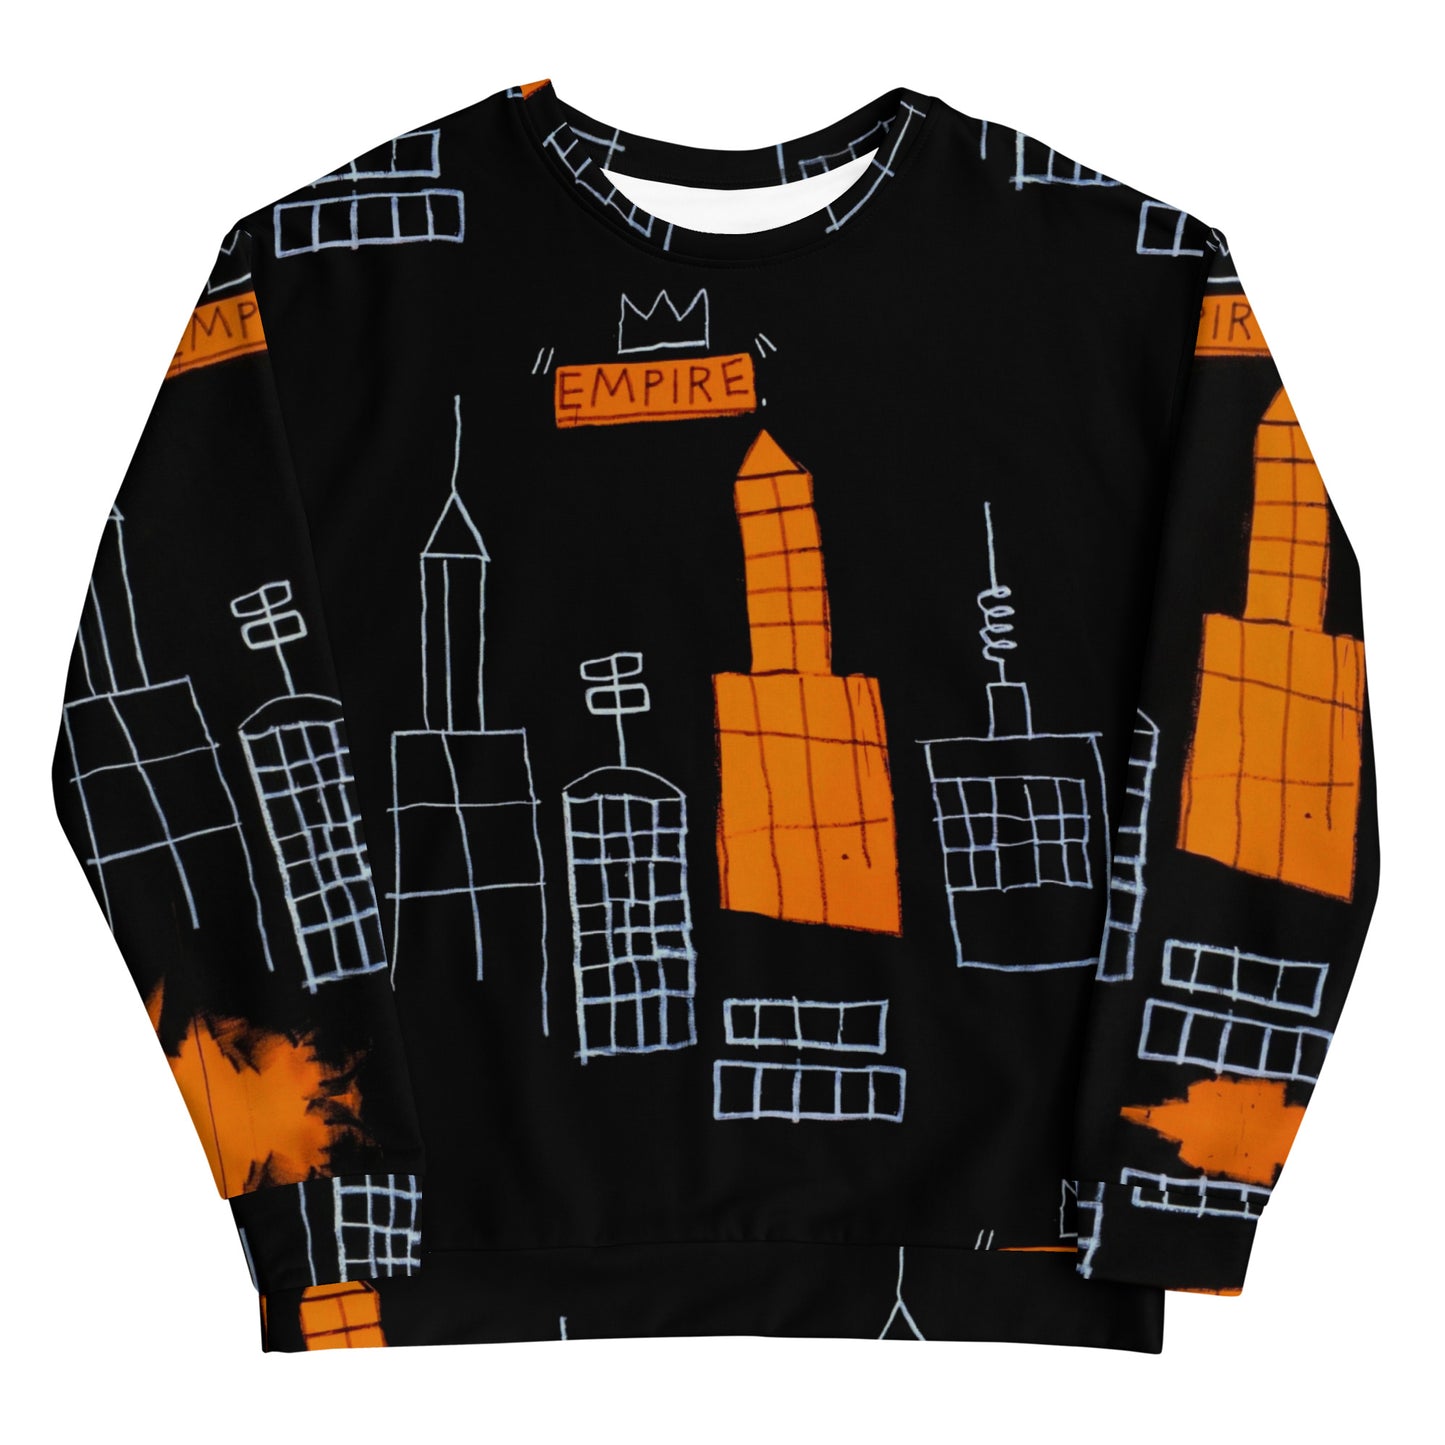 Jean-Michel Basquiat "Mecca" Artwork Printed Premium Streetwear Crewneck Sweatshirt